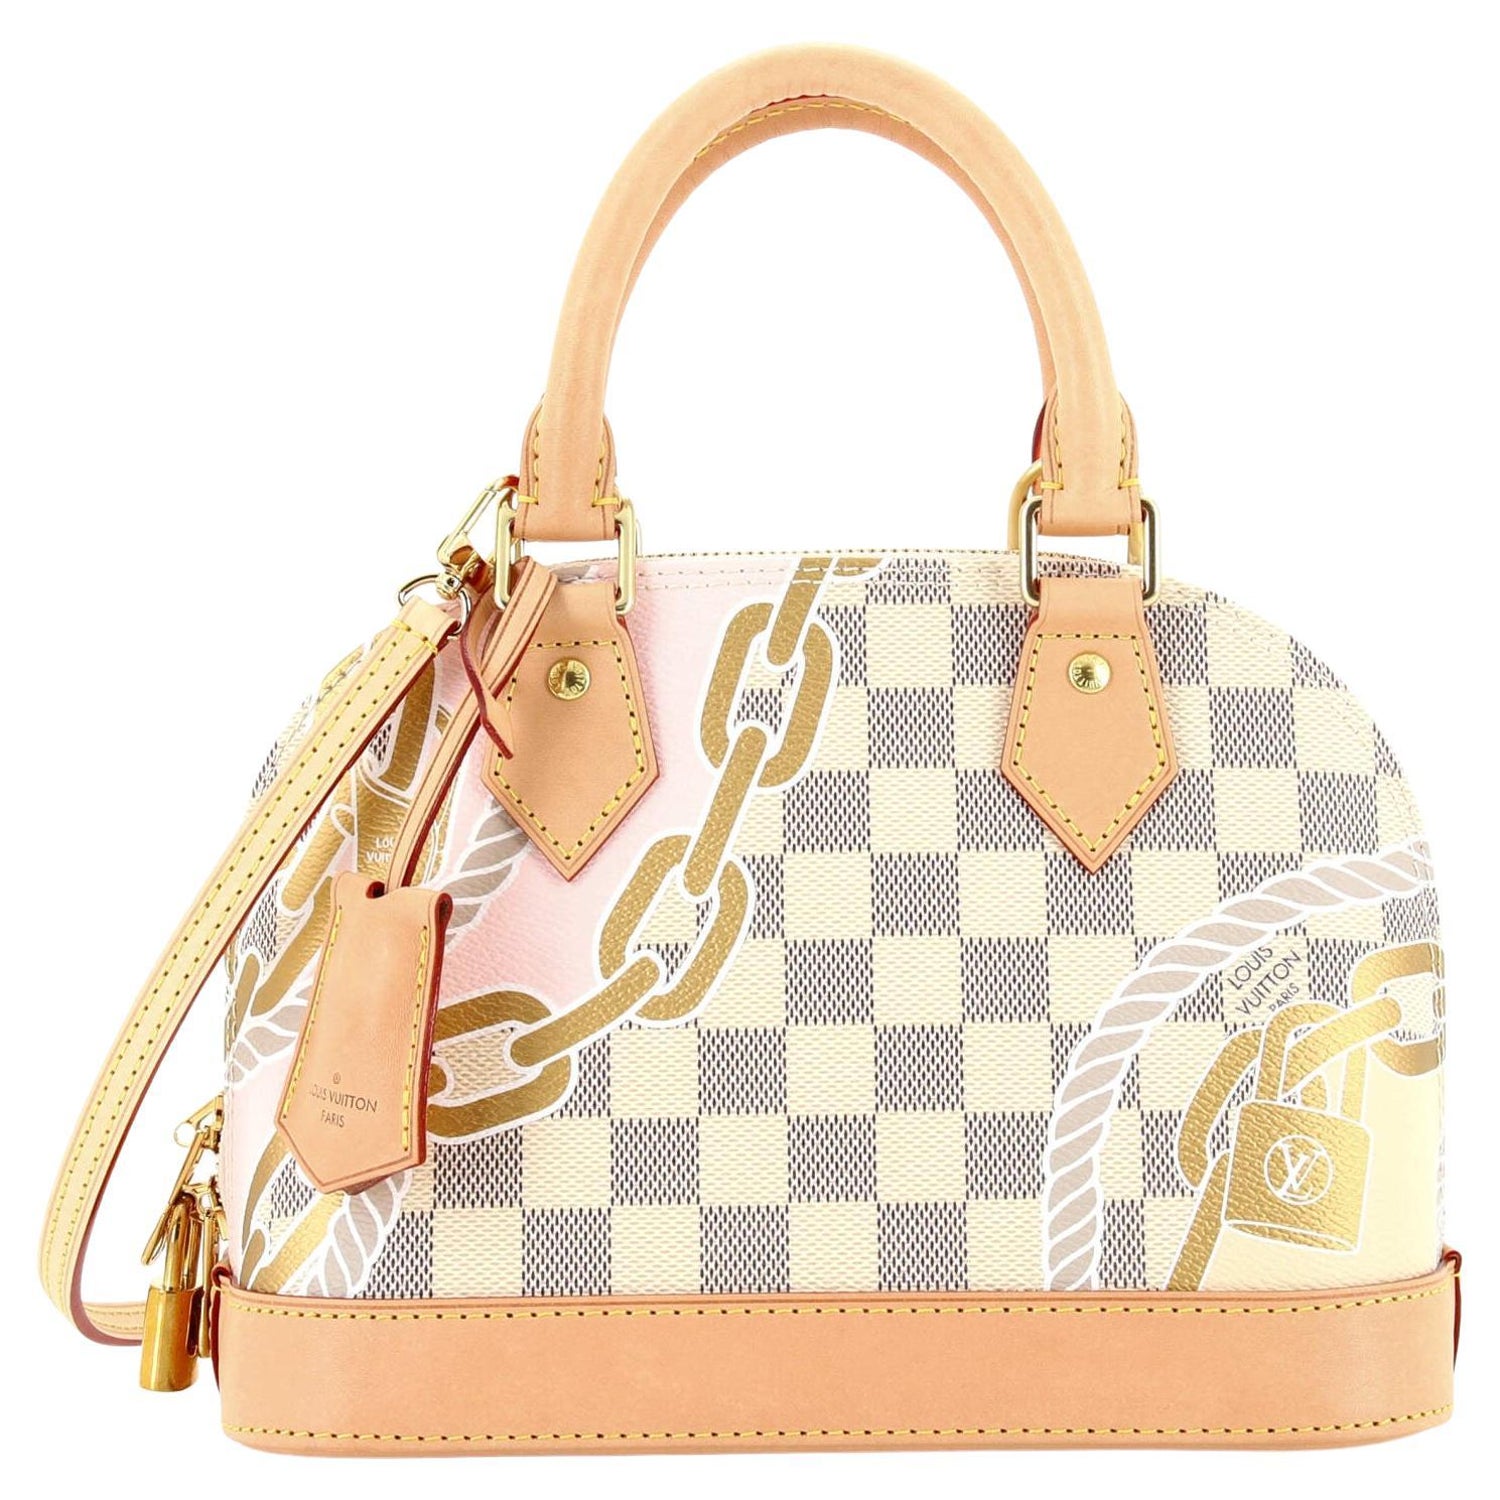 Louis Vuitton Bag Charms - 67 For Sale on 1stDibs  louis vuitton bag charm  price, louis vuitton inspired charms, louis vuitton charms for purses